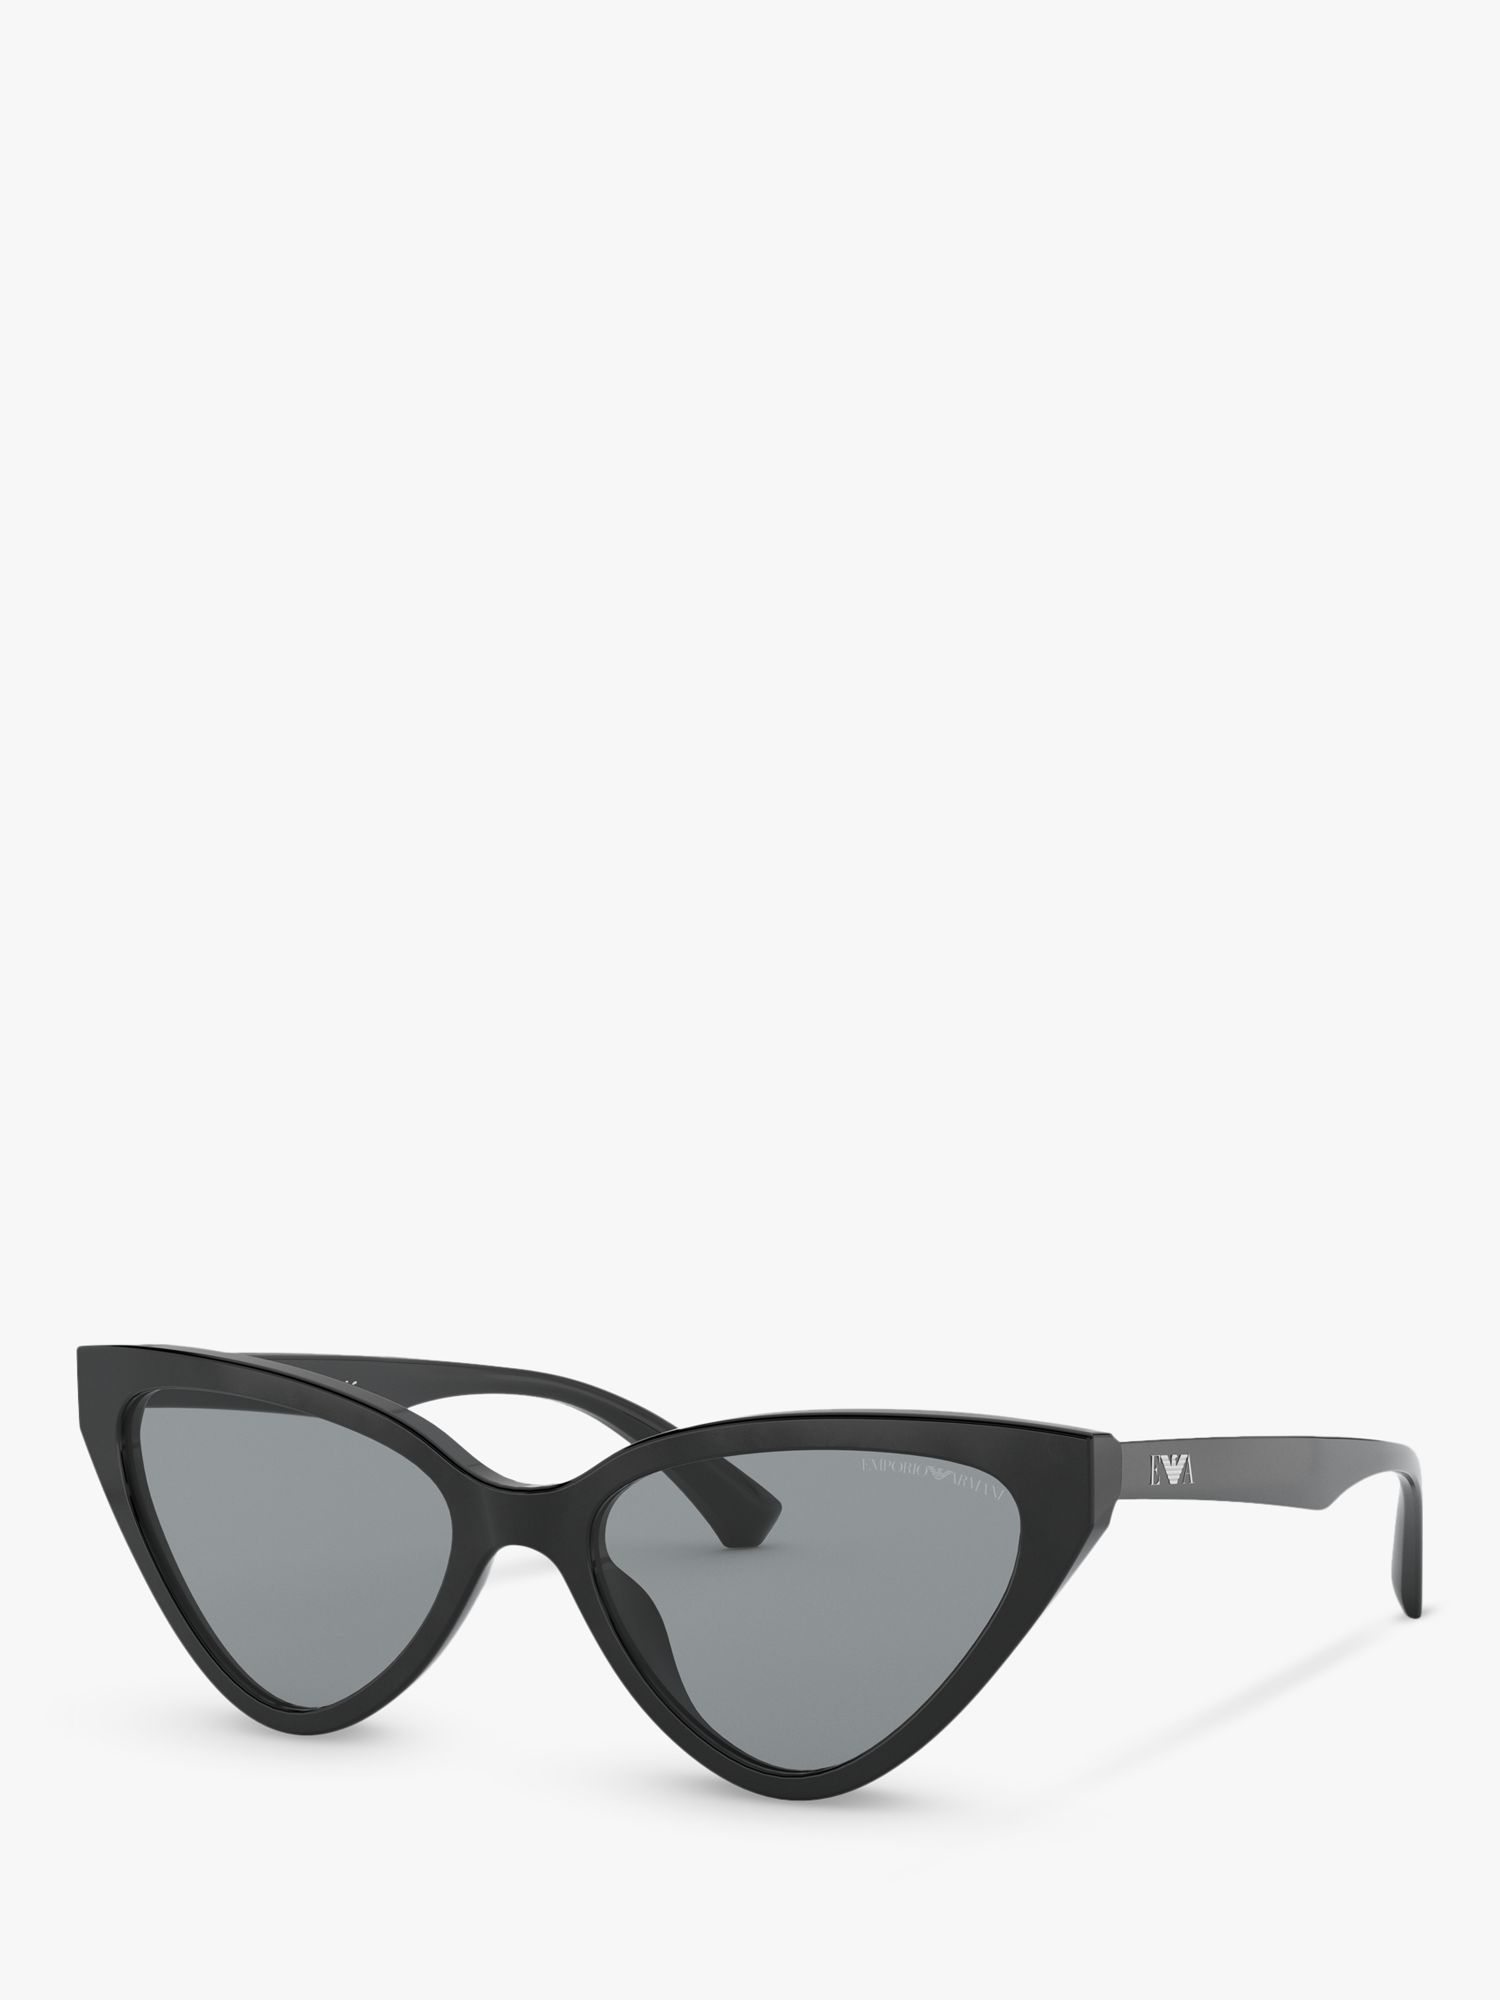 Emporio Armani EA4136 Women's Cat's Eye Sunglasses, Black/Grey at John  Lewis & Partners